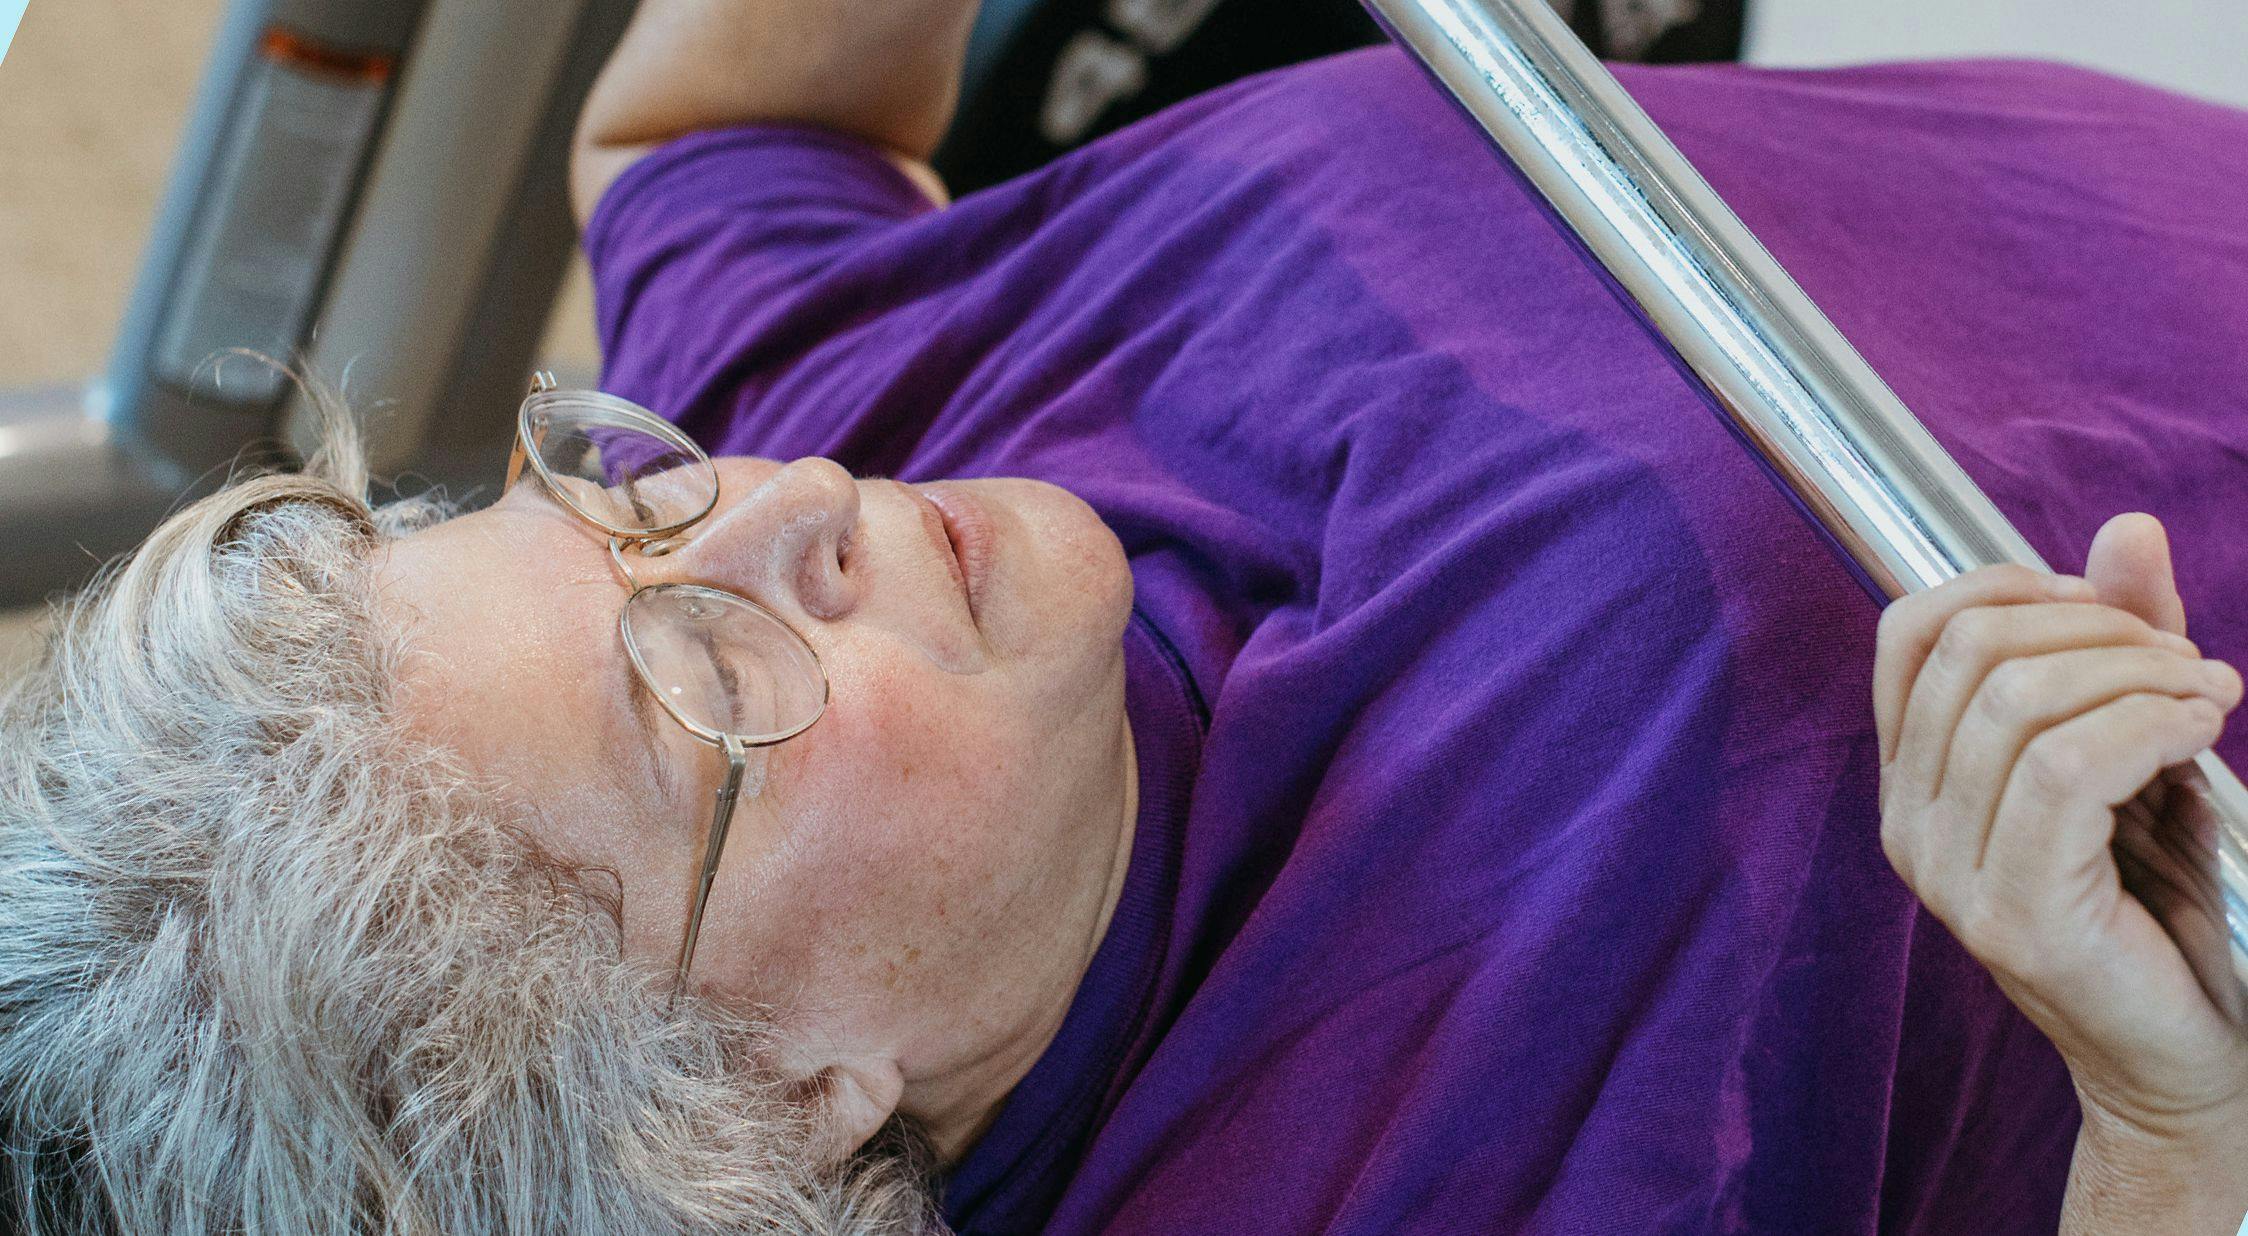 SYLVIA MORITZ
has taken up a
varied exercise
routine that helps
ease her arthralgia. - PHOTO BY MARIA DEFORREST